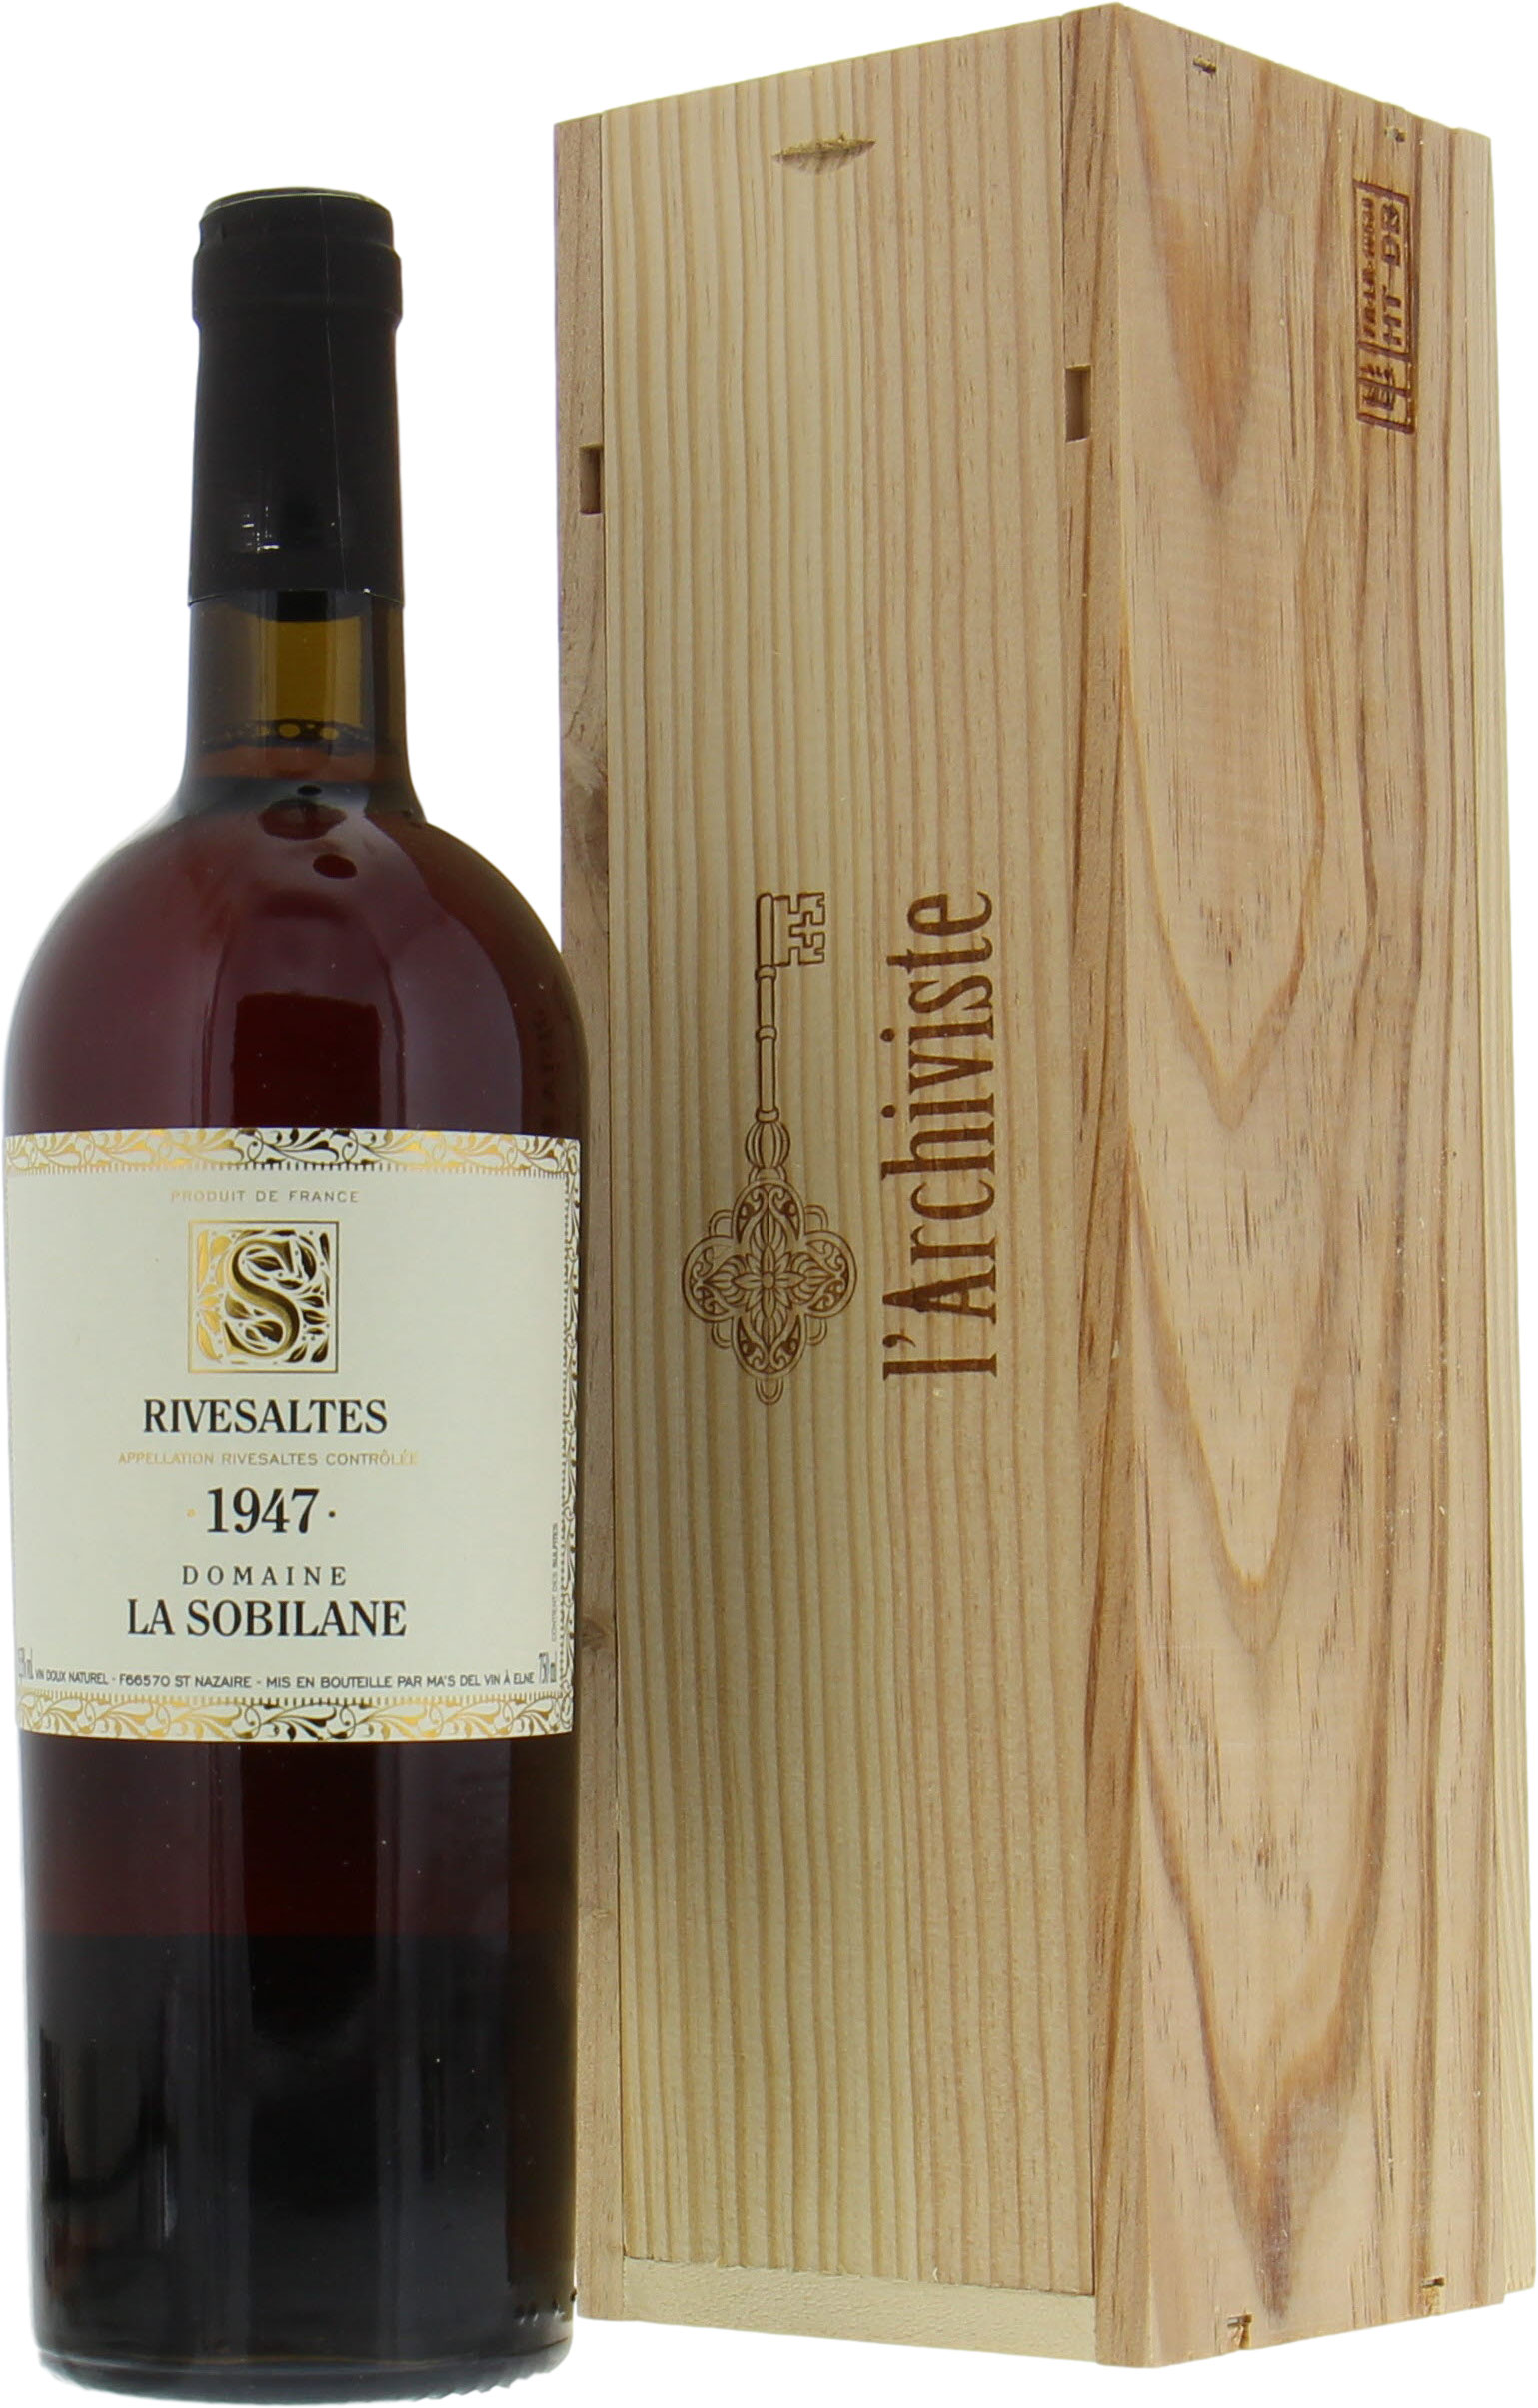 Domaine La Sobilane - Rivesaltes 1947 From Original Wooden Case